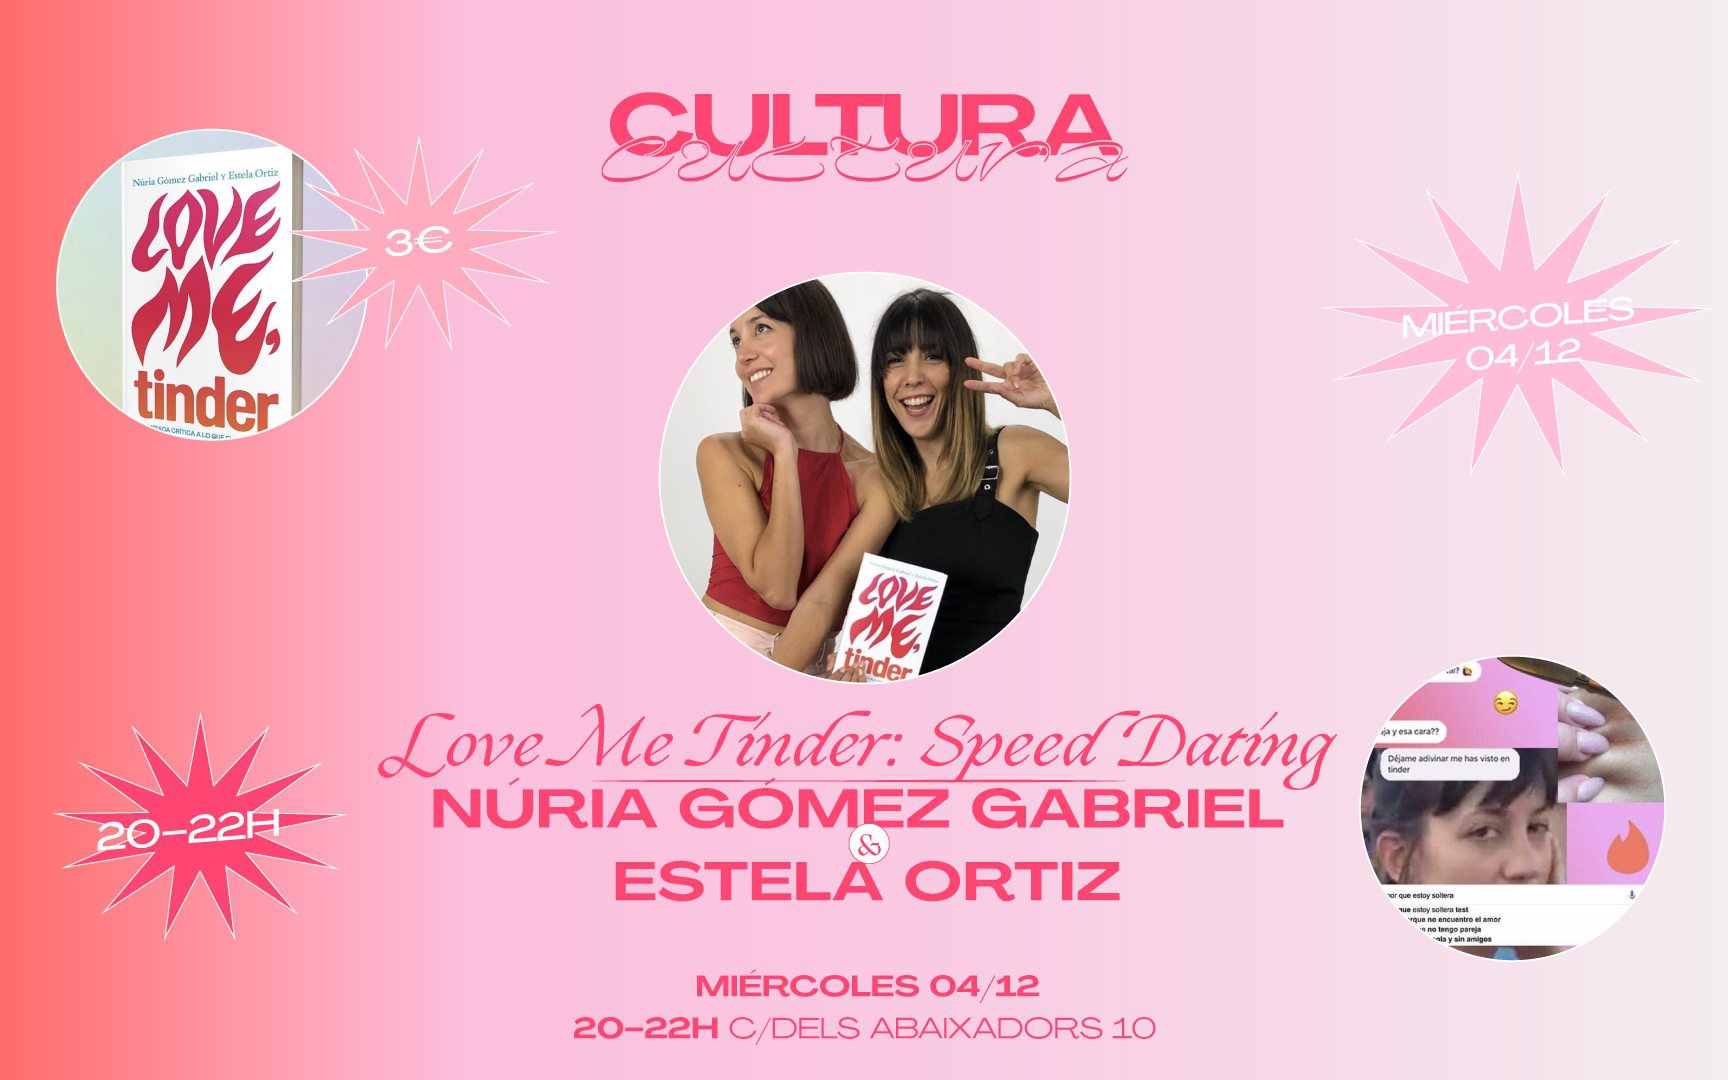 LOVE ME, TINDER - ESTELA ORTIZ; NURIA GOMEZ GABRIEL - 9788499987606